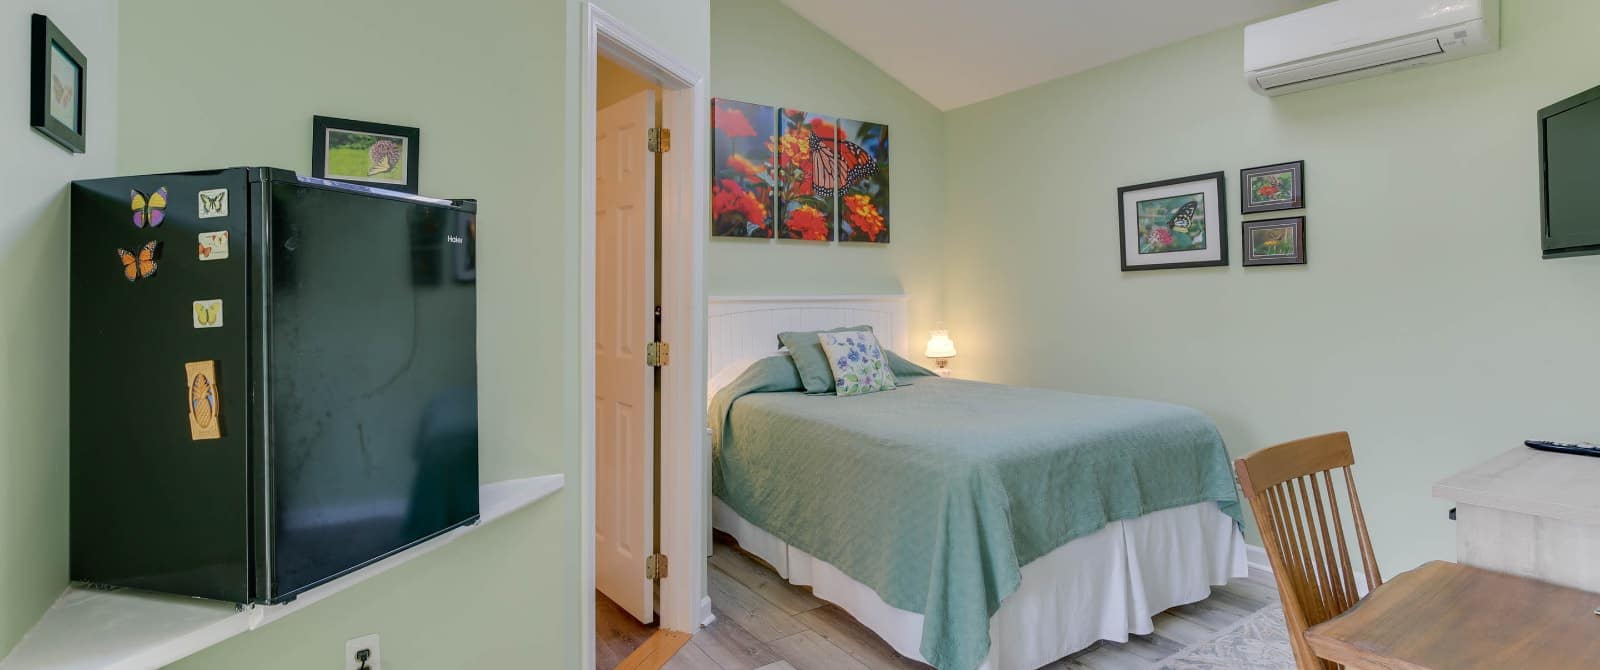 Bedroom with light green walls, hardwood flooring, light green bedding, wood desk and chair, flatscreen TV, and mini fridge